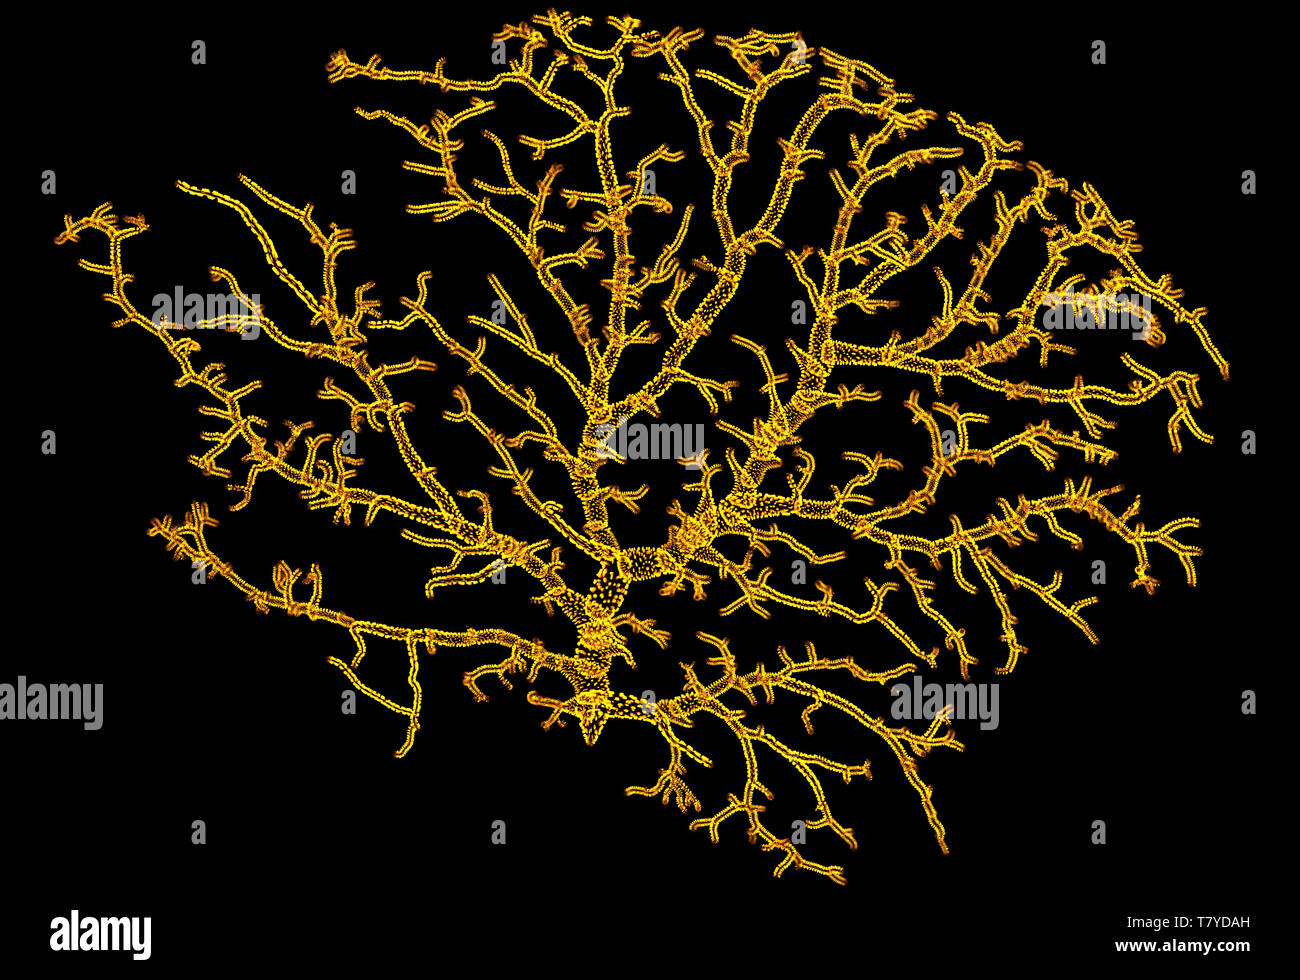 Microscopic view of the neurons. Brain region, optic lobe, drosophila melanogaster neuron. Connections and communication and brain stimulation Stock Photo